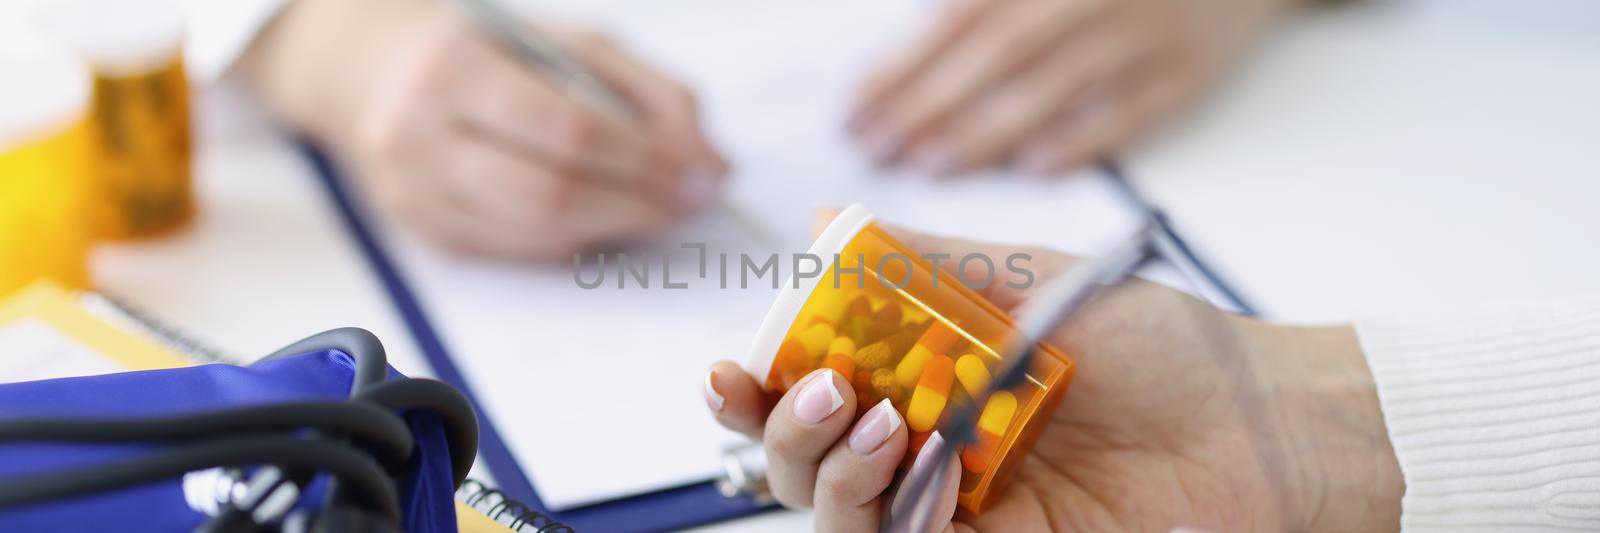 Patient holding jar of medicines in his hands against background of doctor closeup. Prescription drug dispensing concept